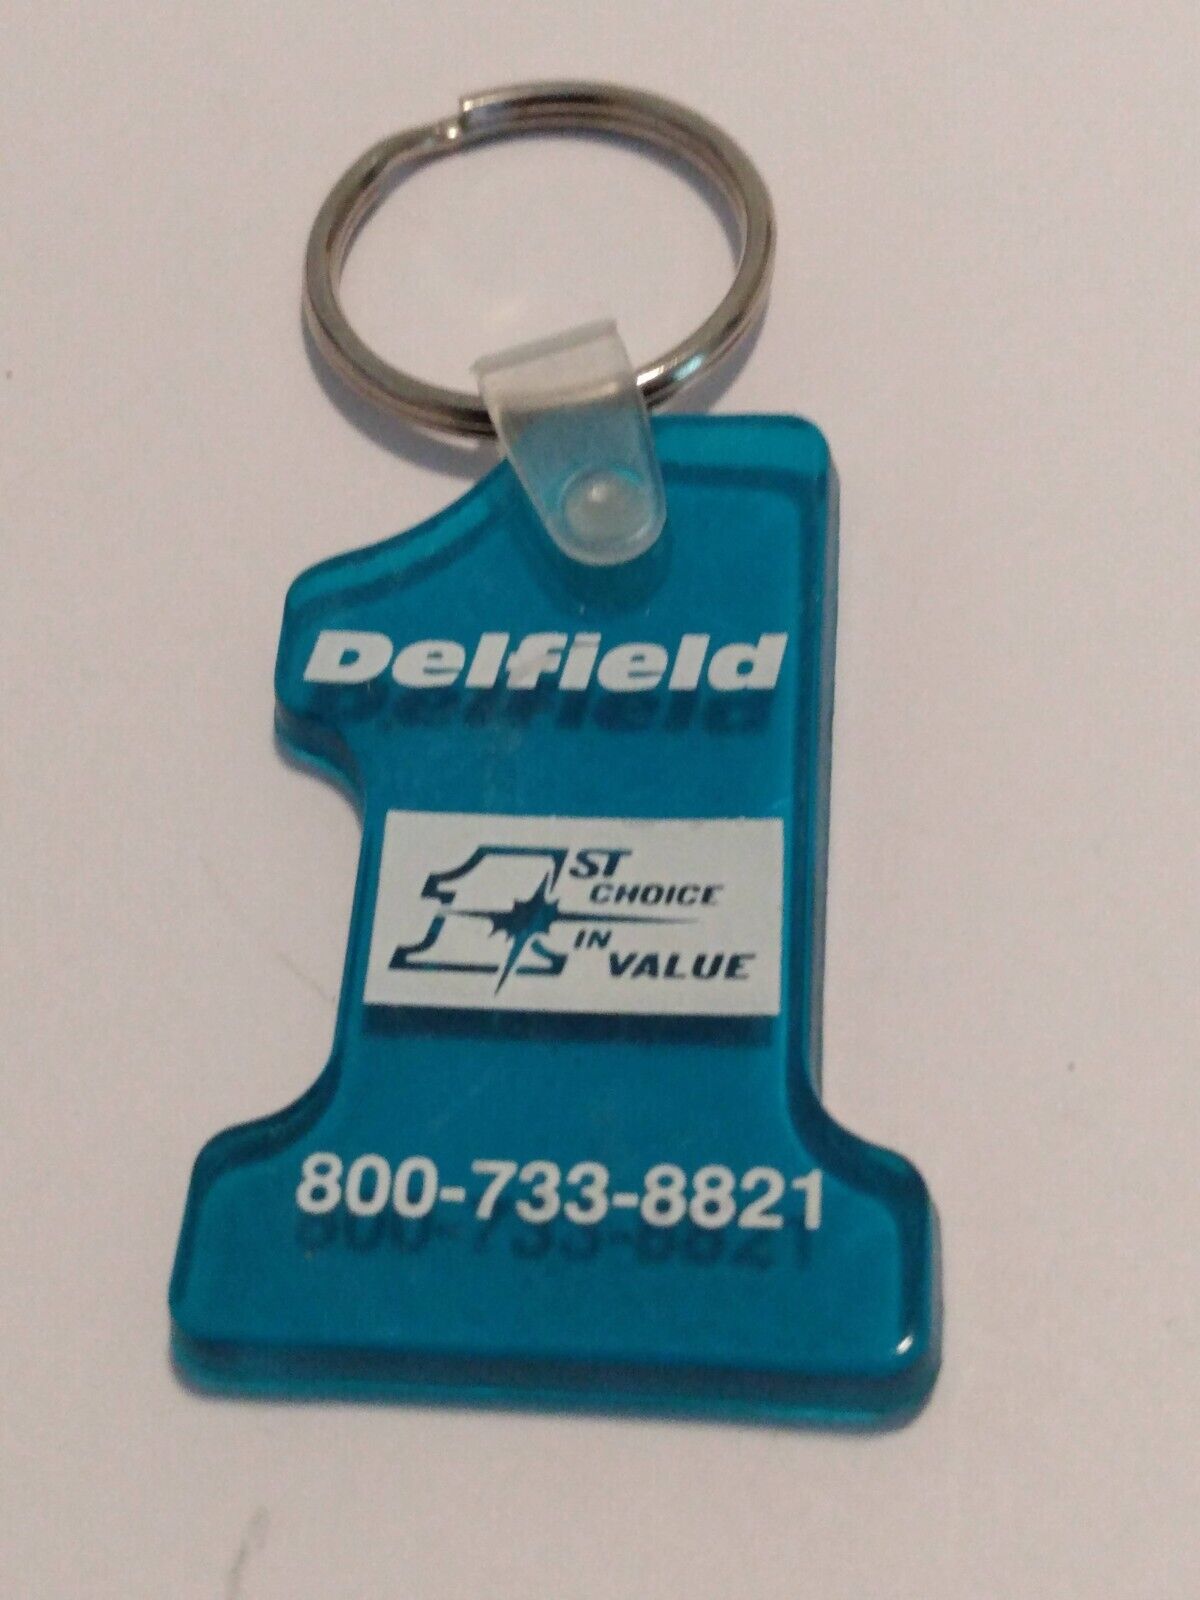 Delfield 1st Choice in Value Advertising Keyring